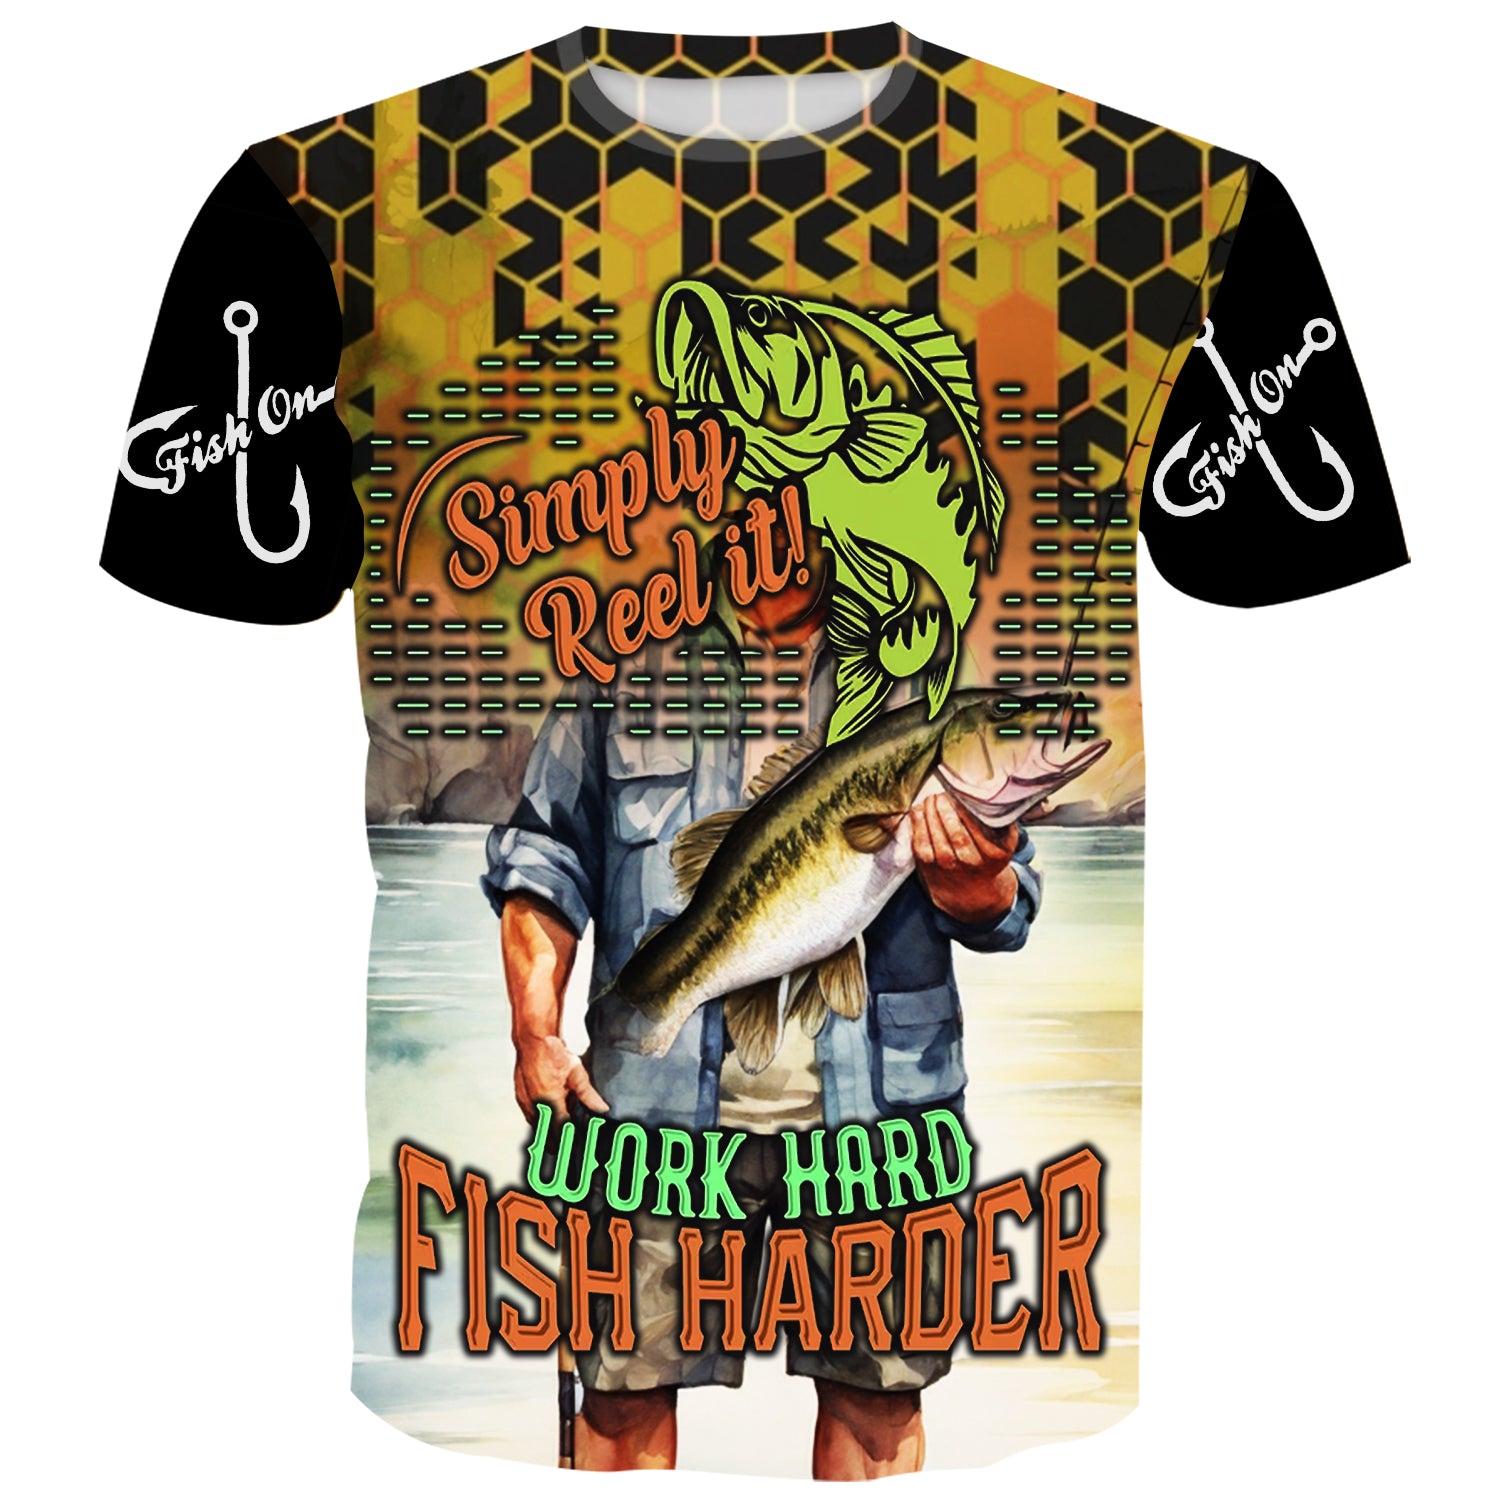 Simply Reel it, Work Hard Fish Harder - T-Shirt